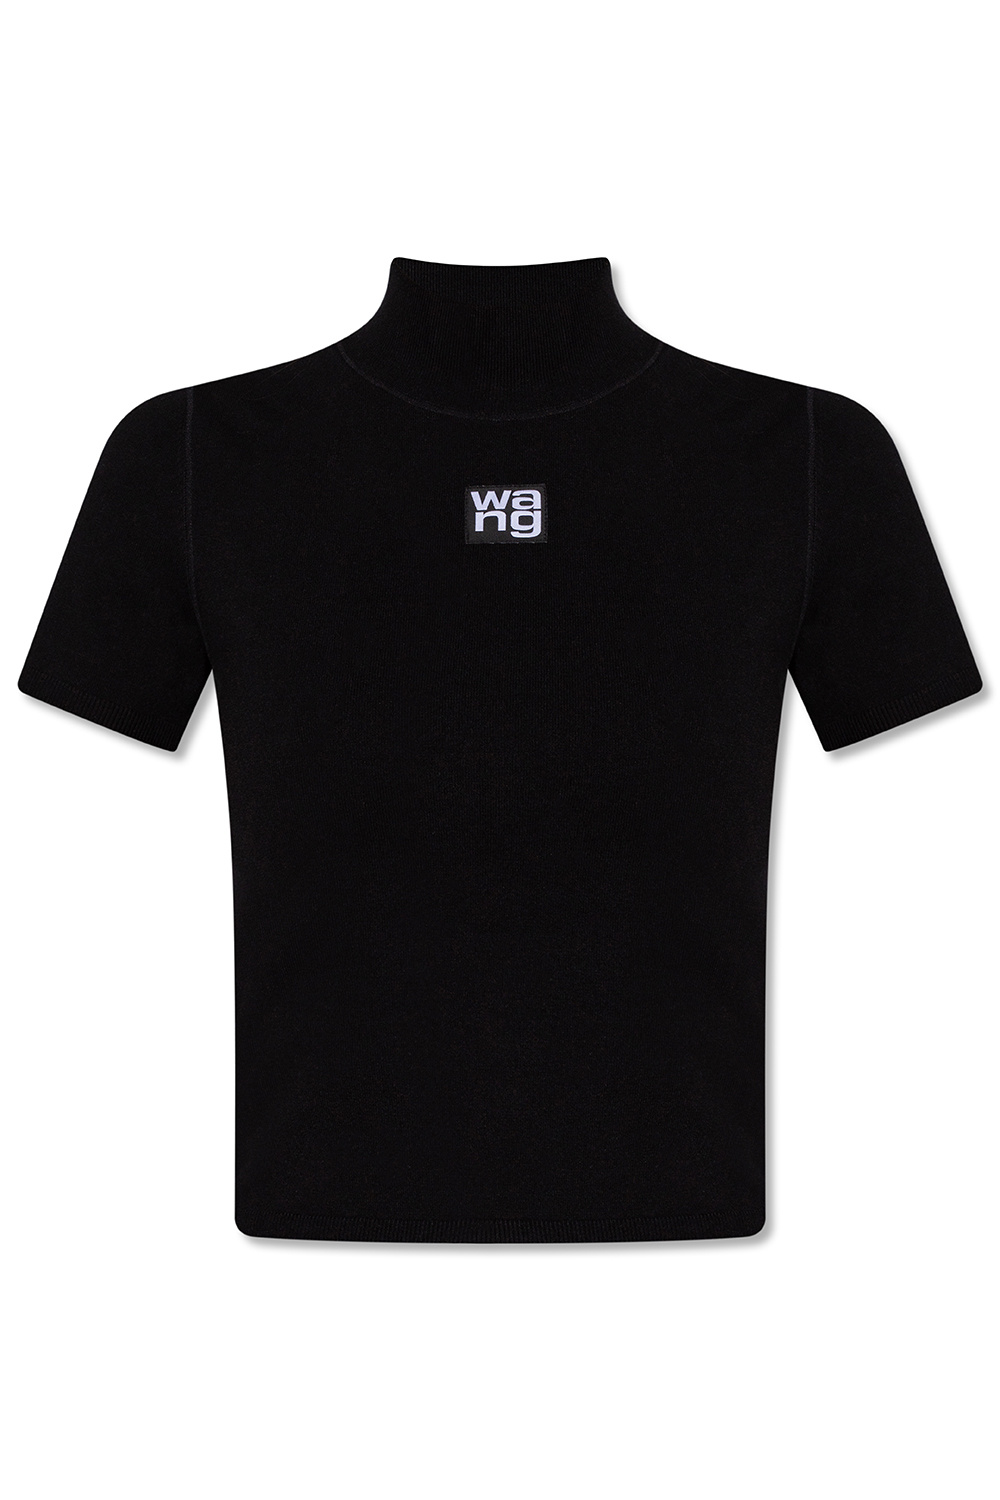 Black Short top with logo T by Alexander Wang - Vitkac Canada